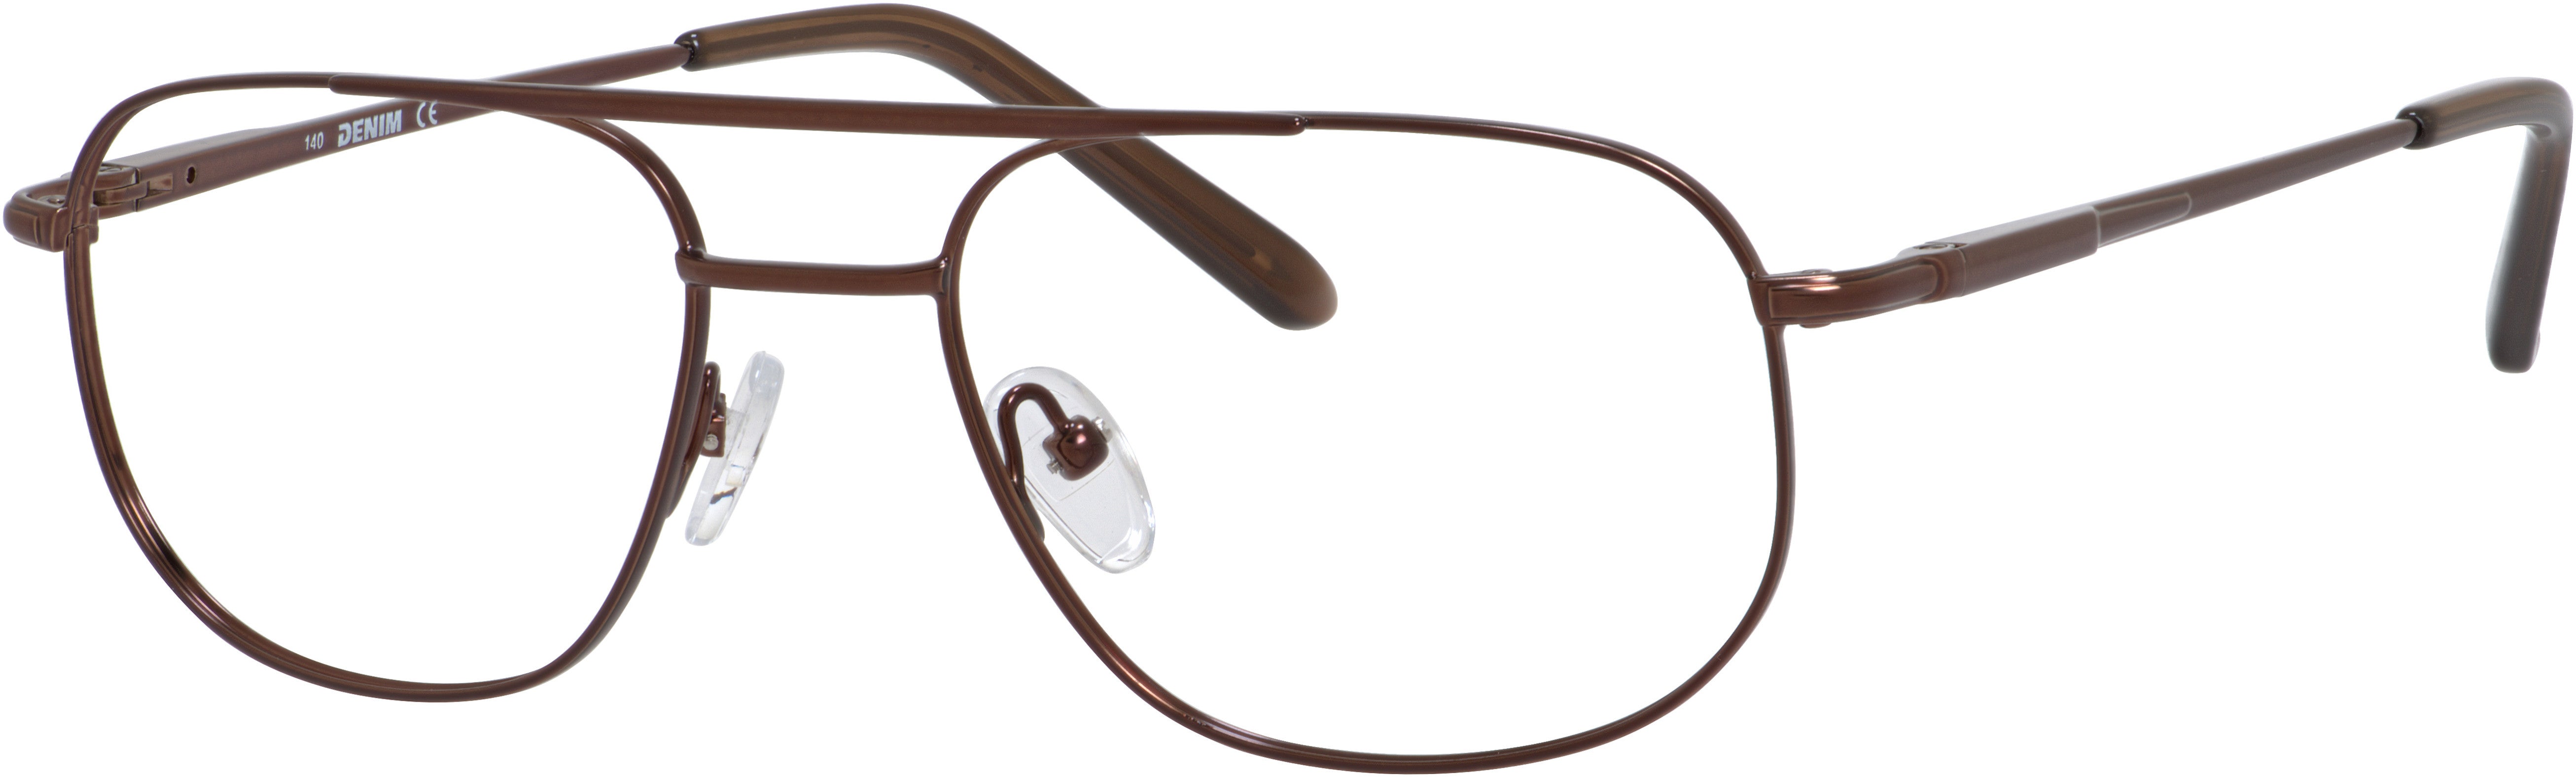  Denim 133 Oval Modified Eyeglasses 01D1-01D1  Brown (00 Demo Lens)